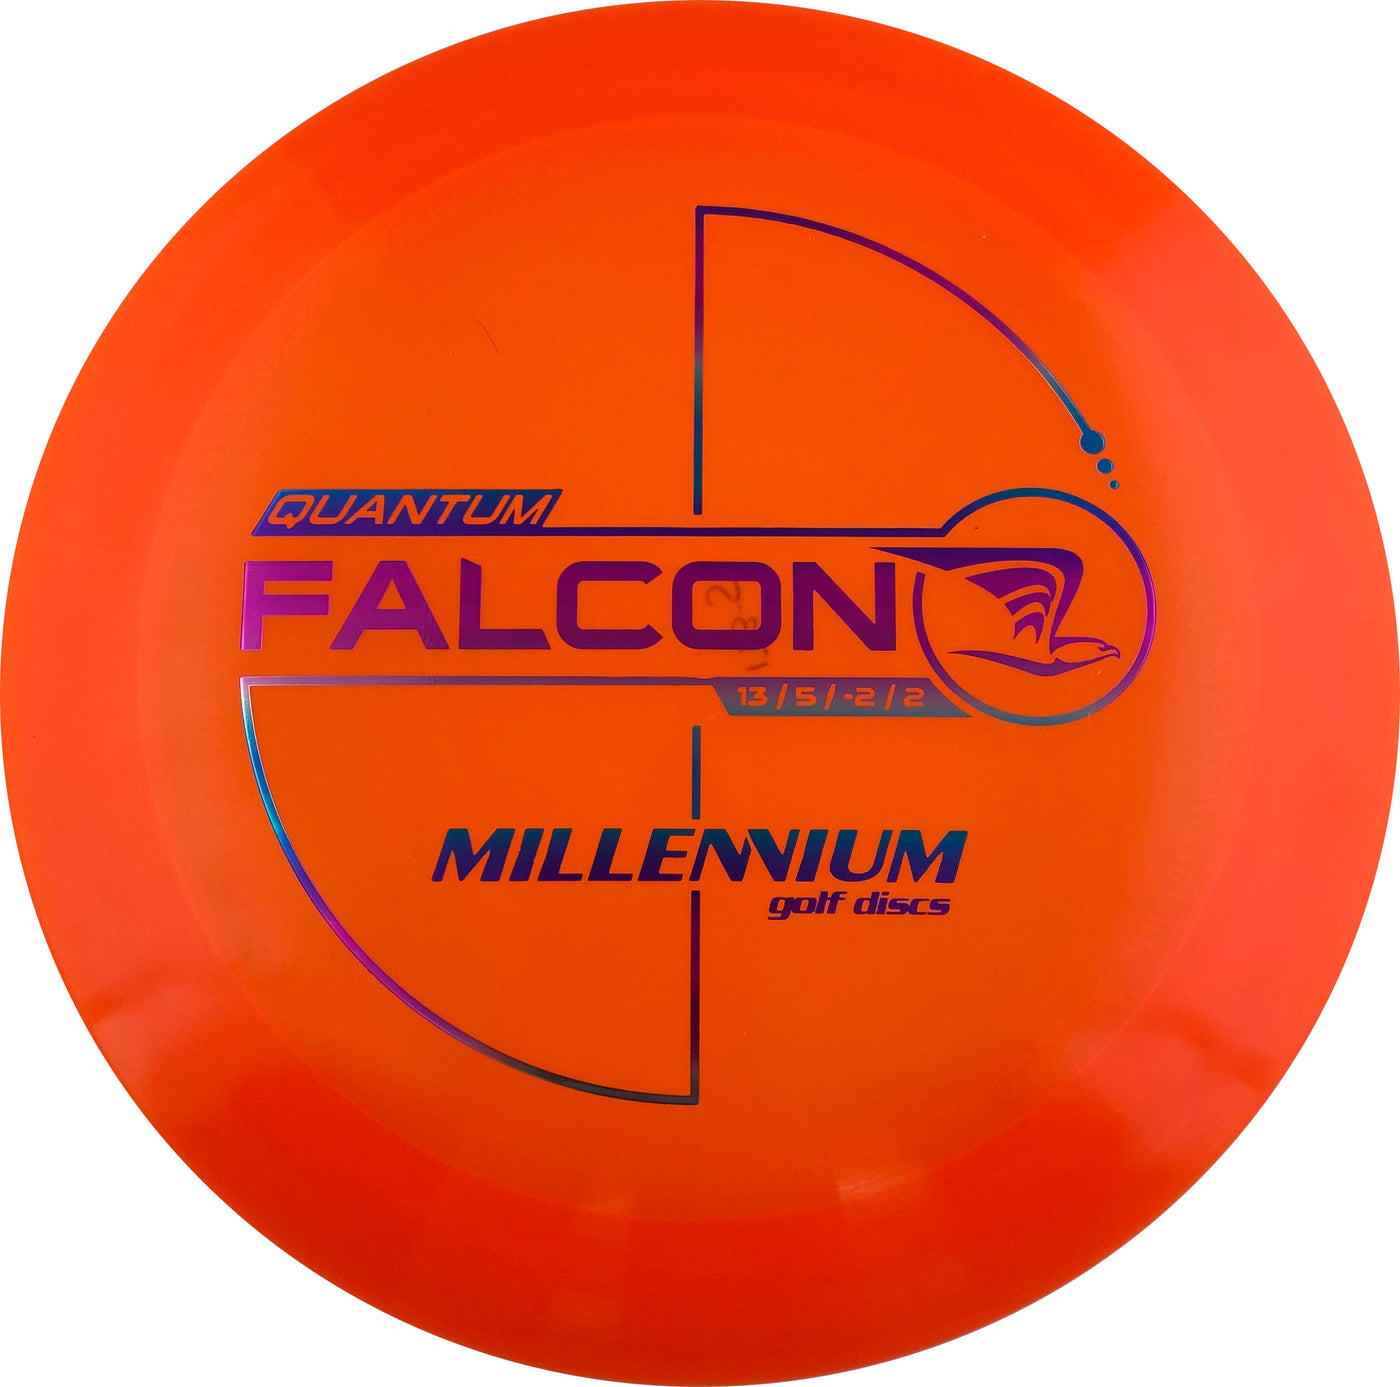 Millennium Quantum Falcon Distance Driver with Run 1.1 Stamp - Speed 13